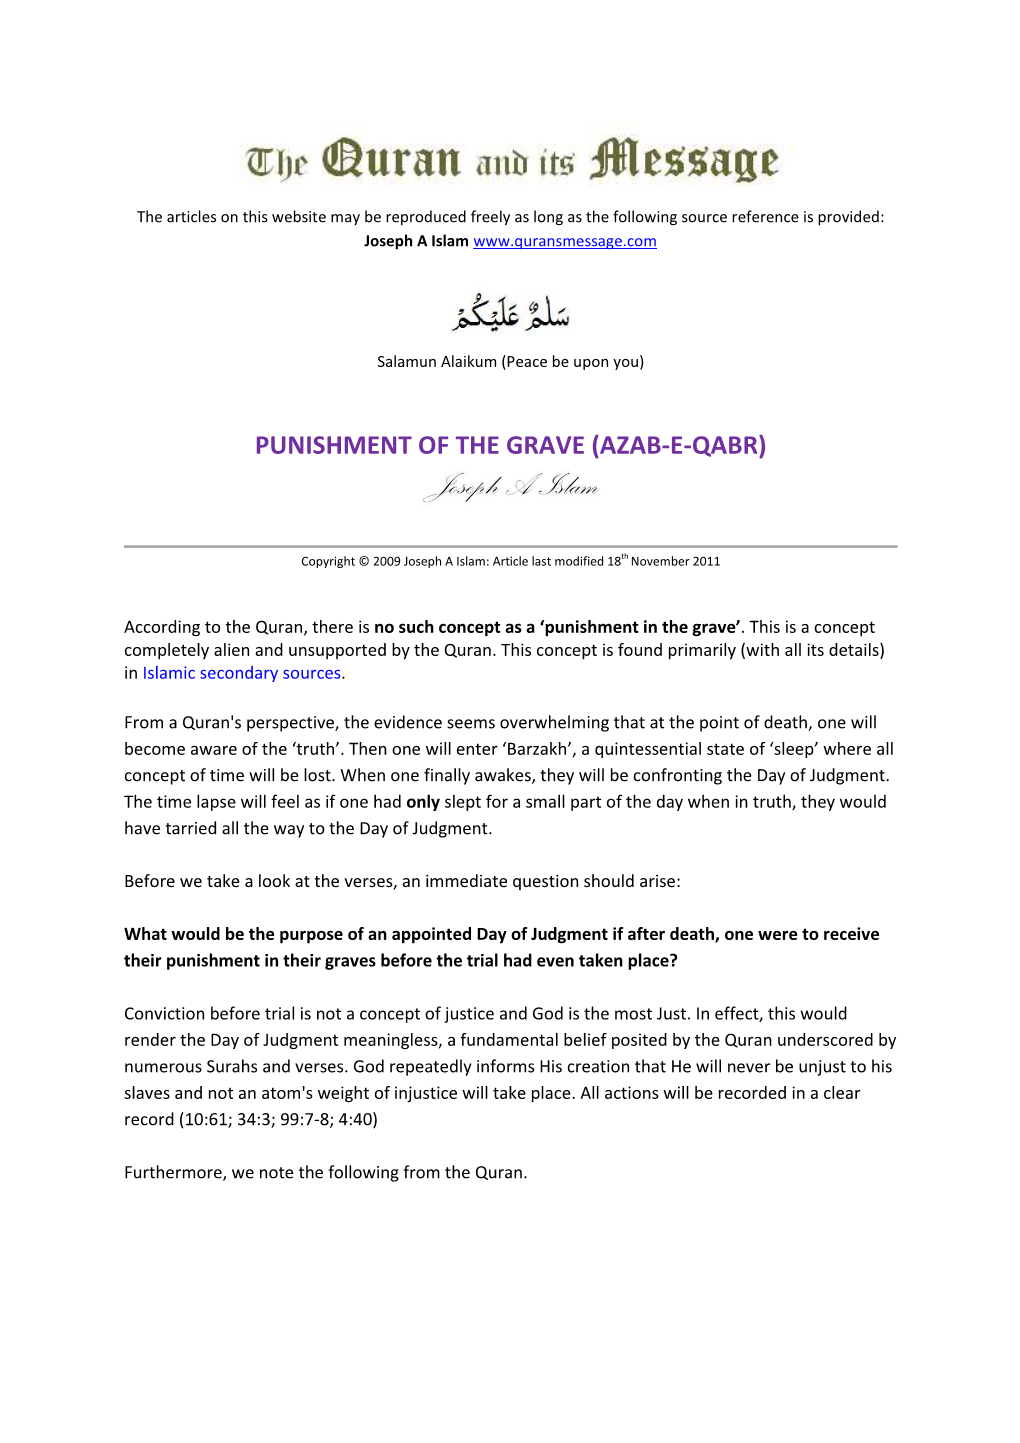 Punishment of the Grave (Azab-E-Qabr)